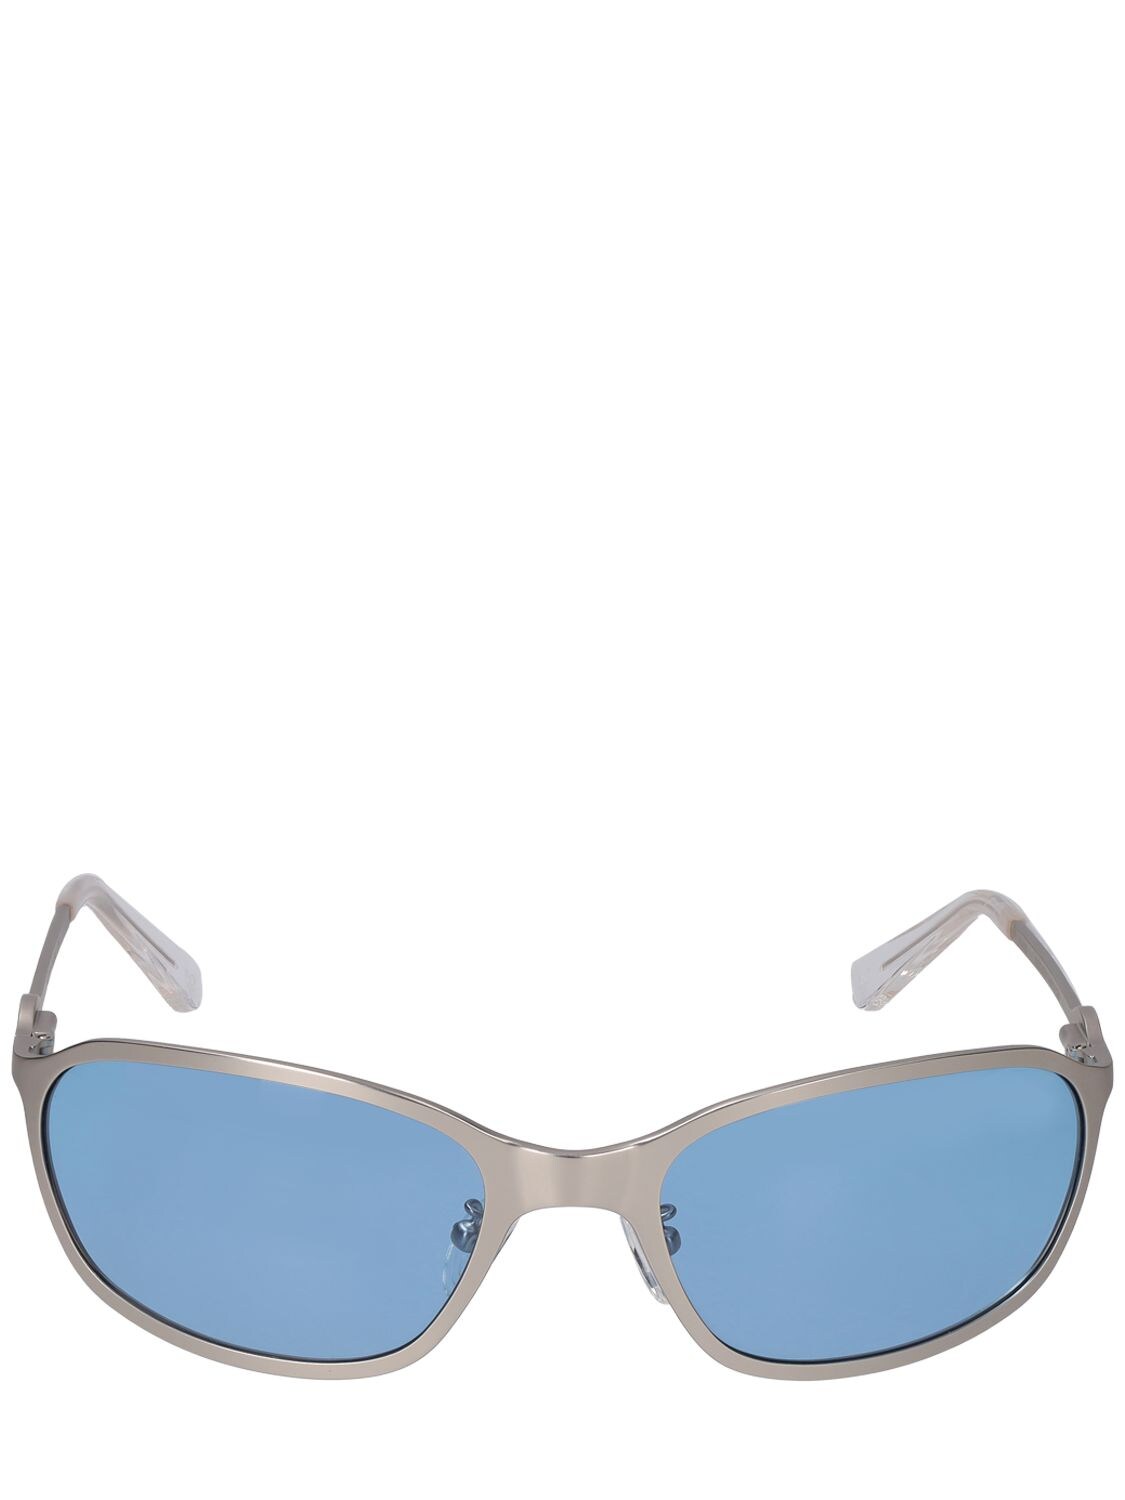 Paxis Cloud Blue Round Sunglasses – WOMEN > ACCESSORIES > SUNGLASSES